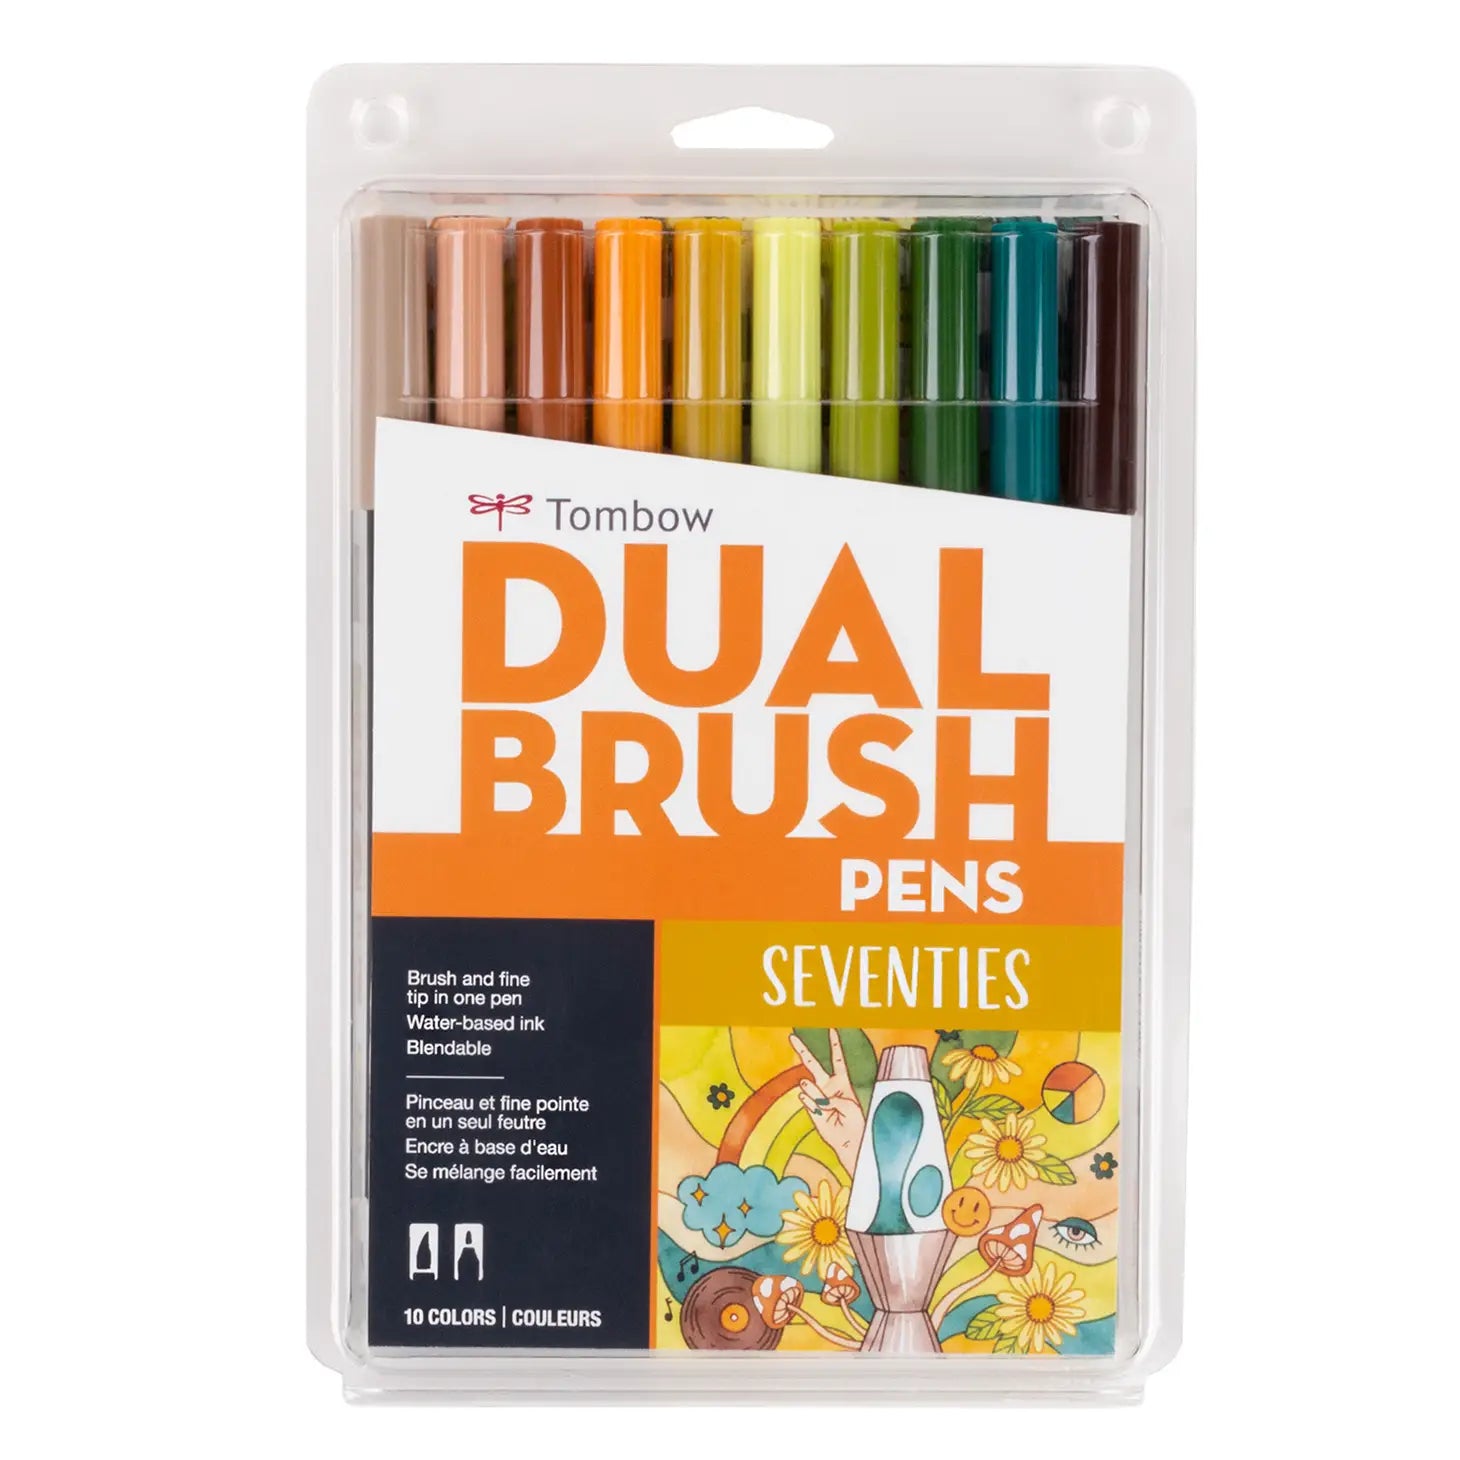 Twin Brush Markers, Art, Craft & Stationery